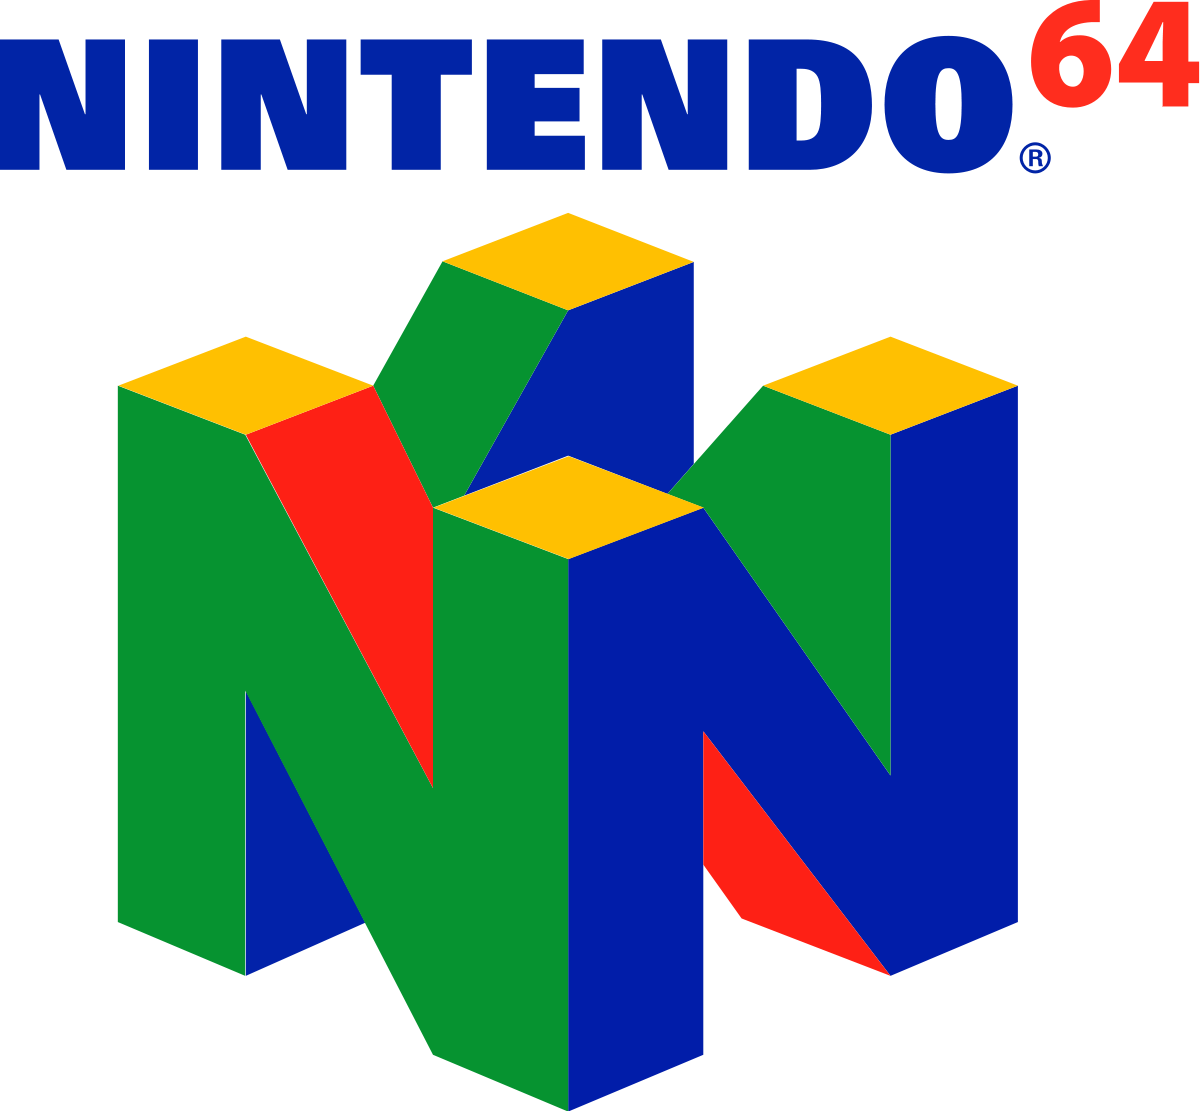 Nintendo 64 wallpaper, Video Game, HQ Nintendo 64 pictureK Wallpaper 2019